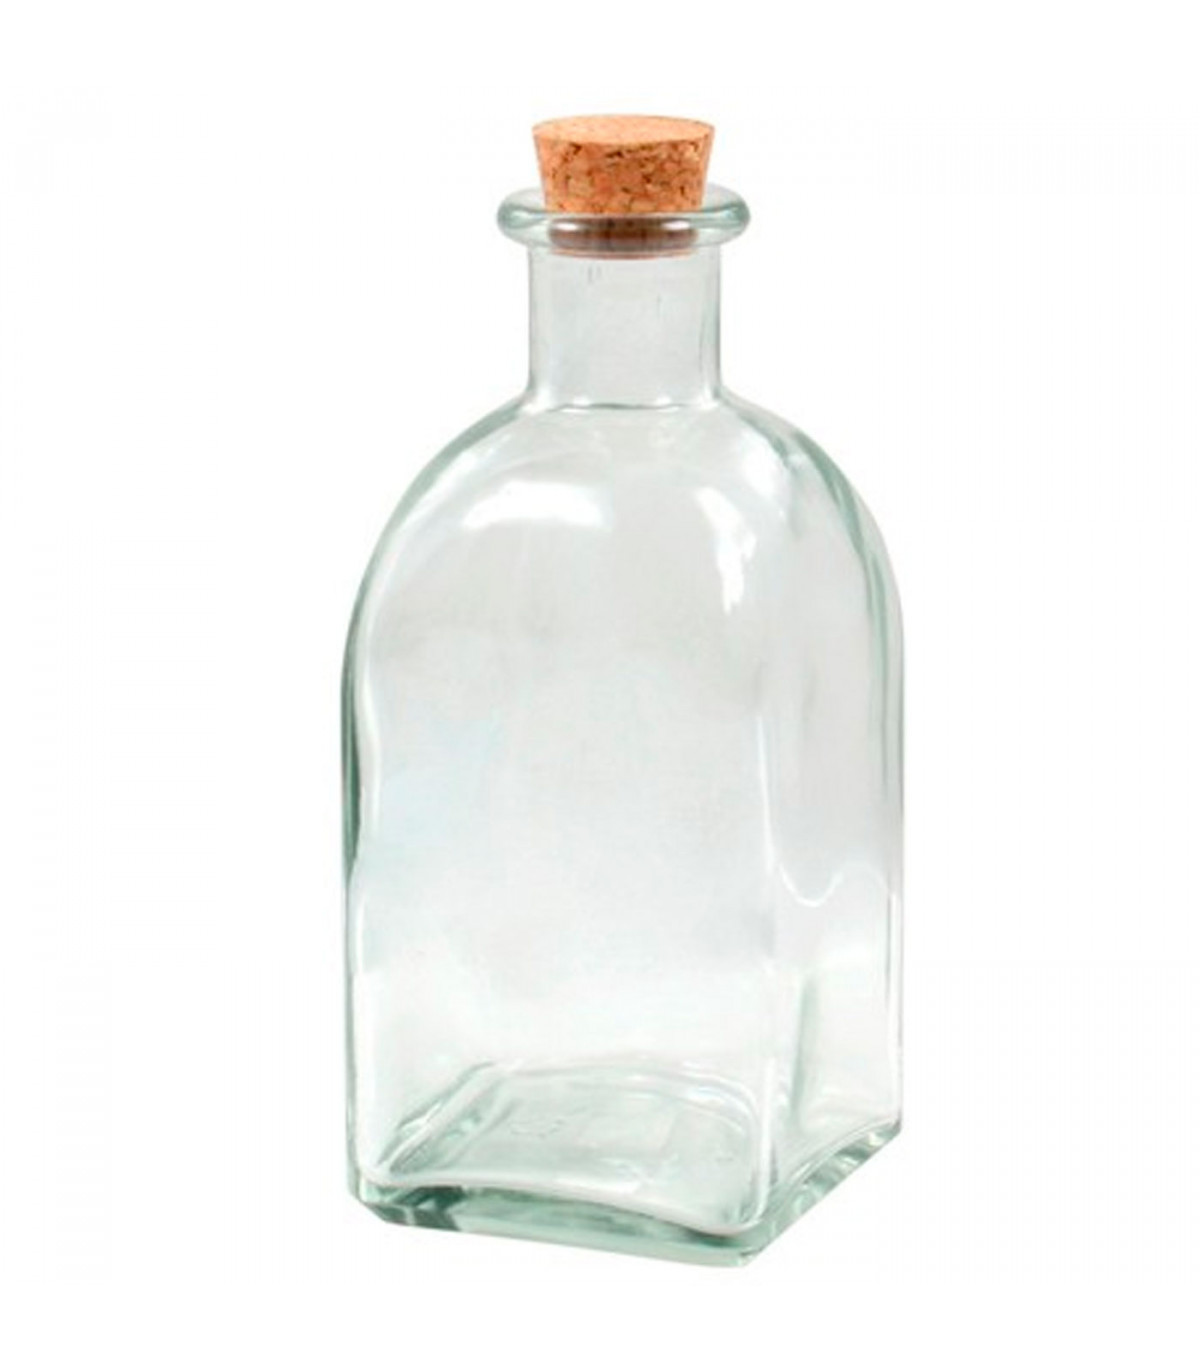 Tradineur - Pack de 6 botellas de cristal, frascas con tapón de